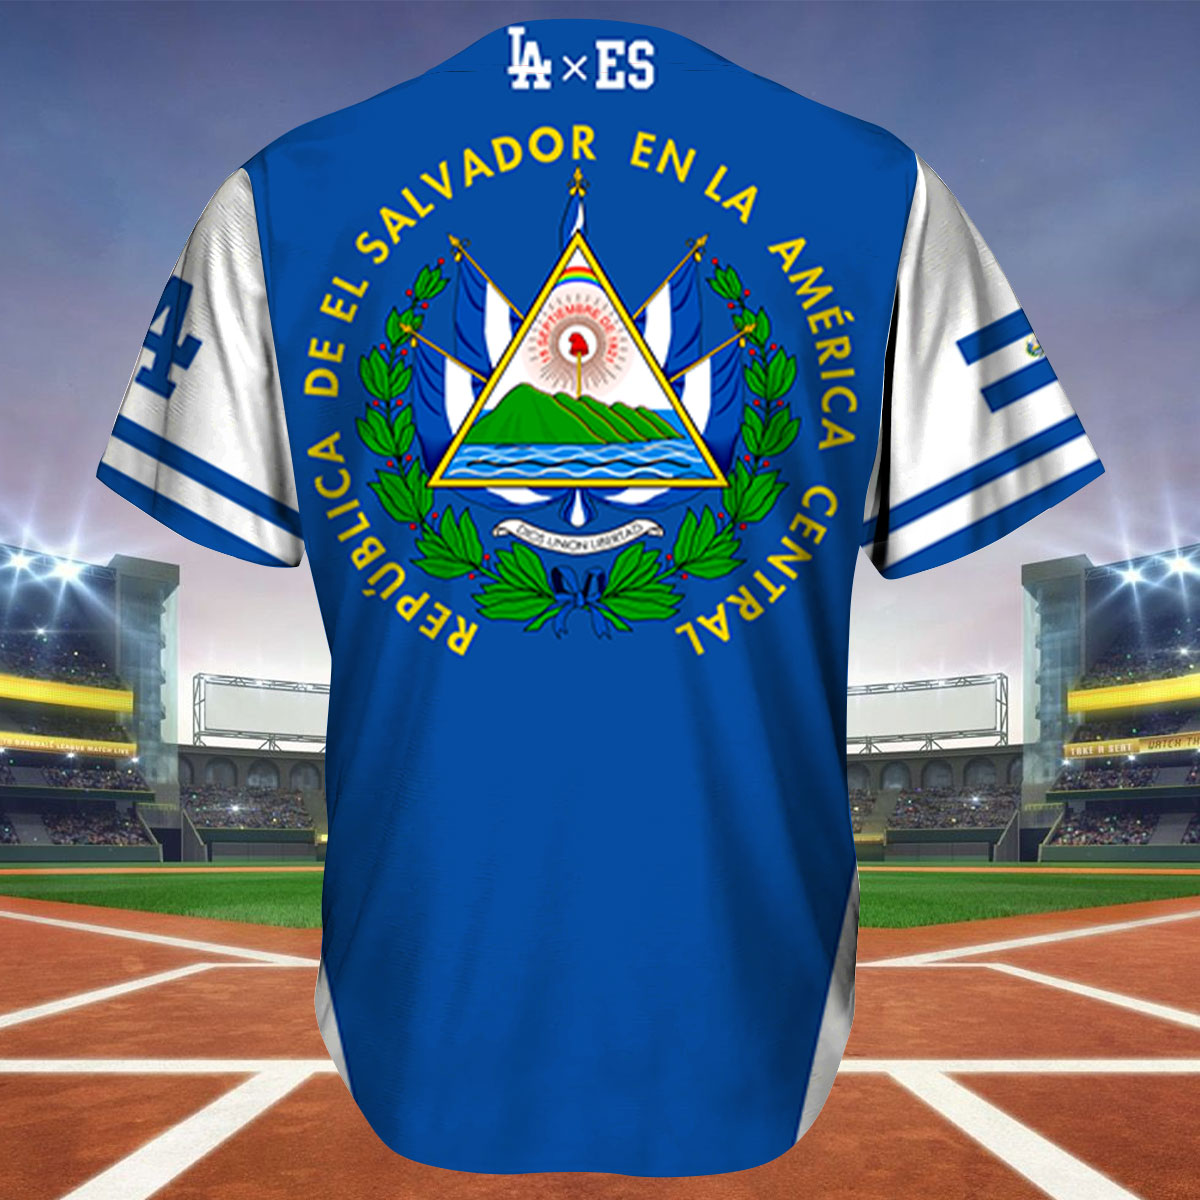 Eletees 2023 Salvadoran Heritage Night Dodgers Jersey Giveaway